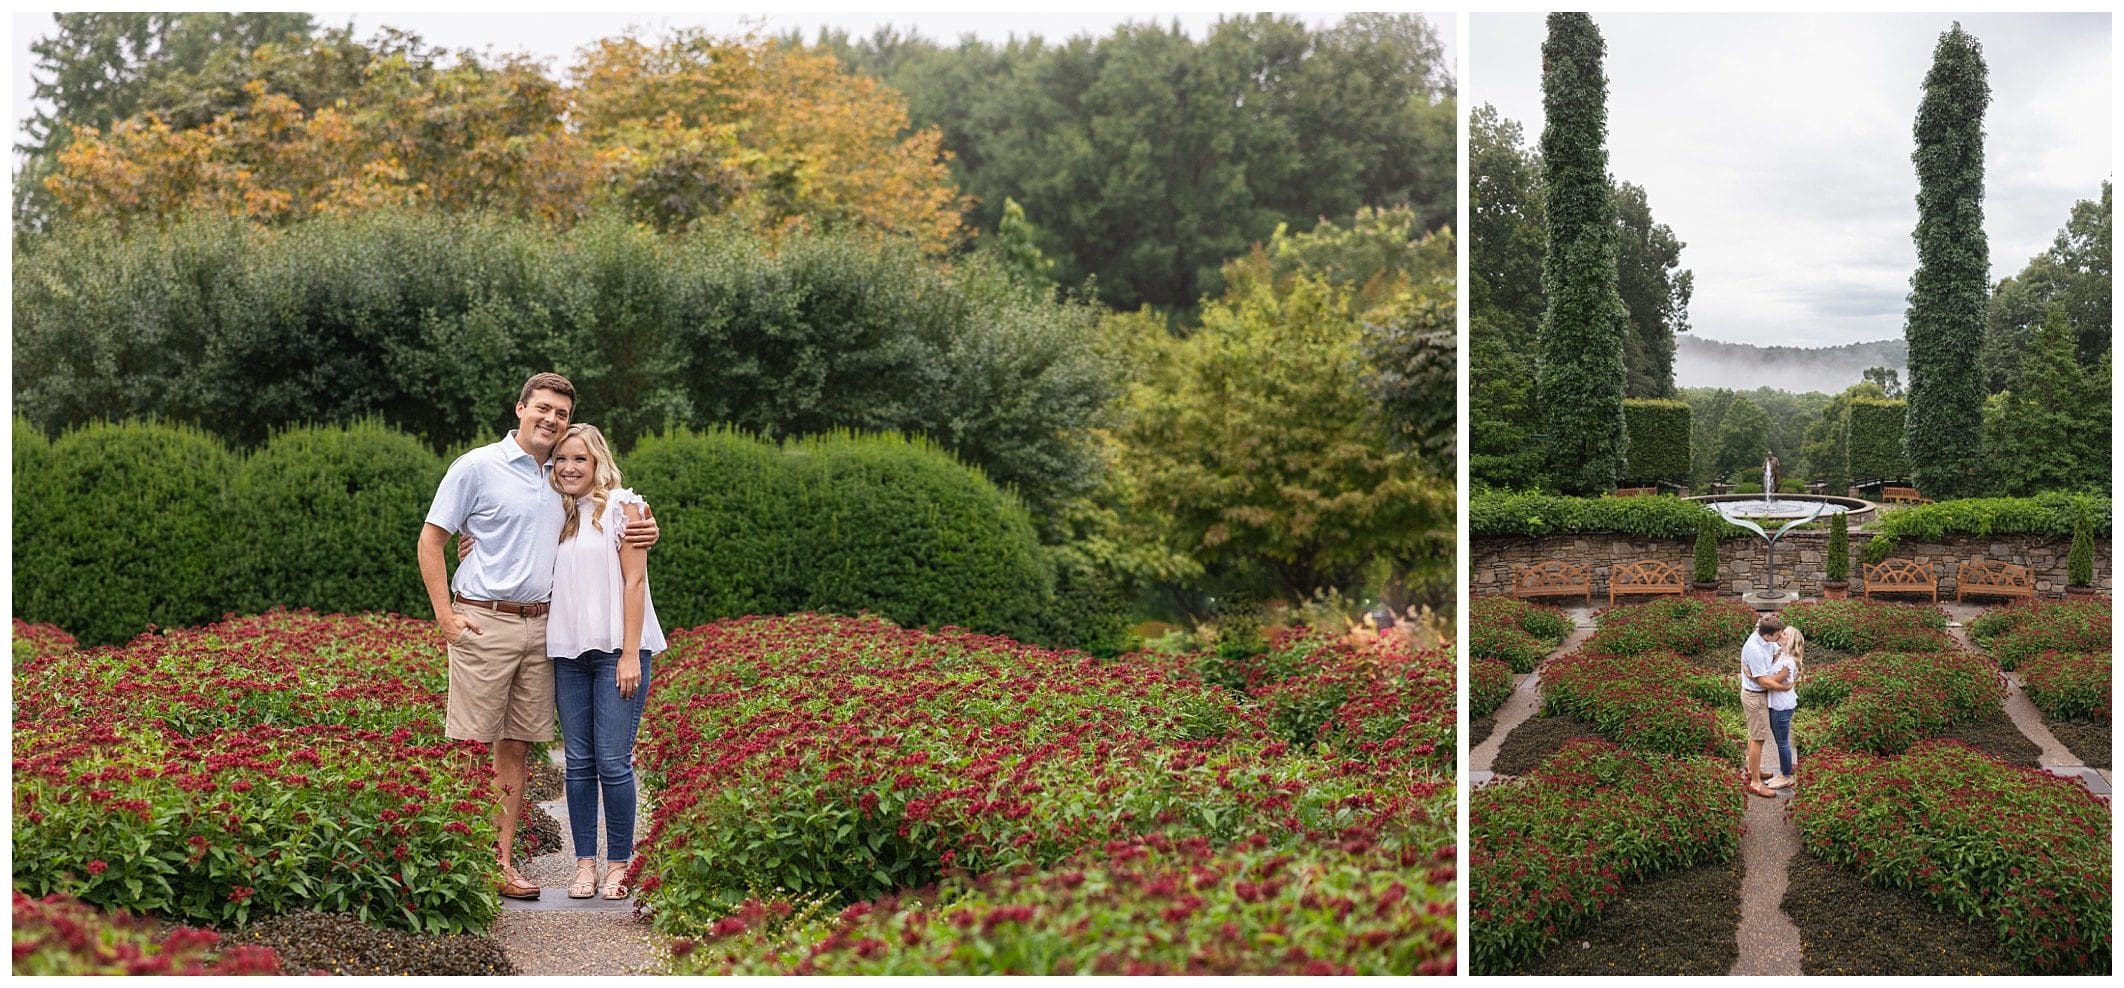 couple poses in quilt garden of flowers at the North Carolina Arboretum